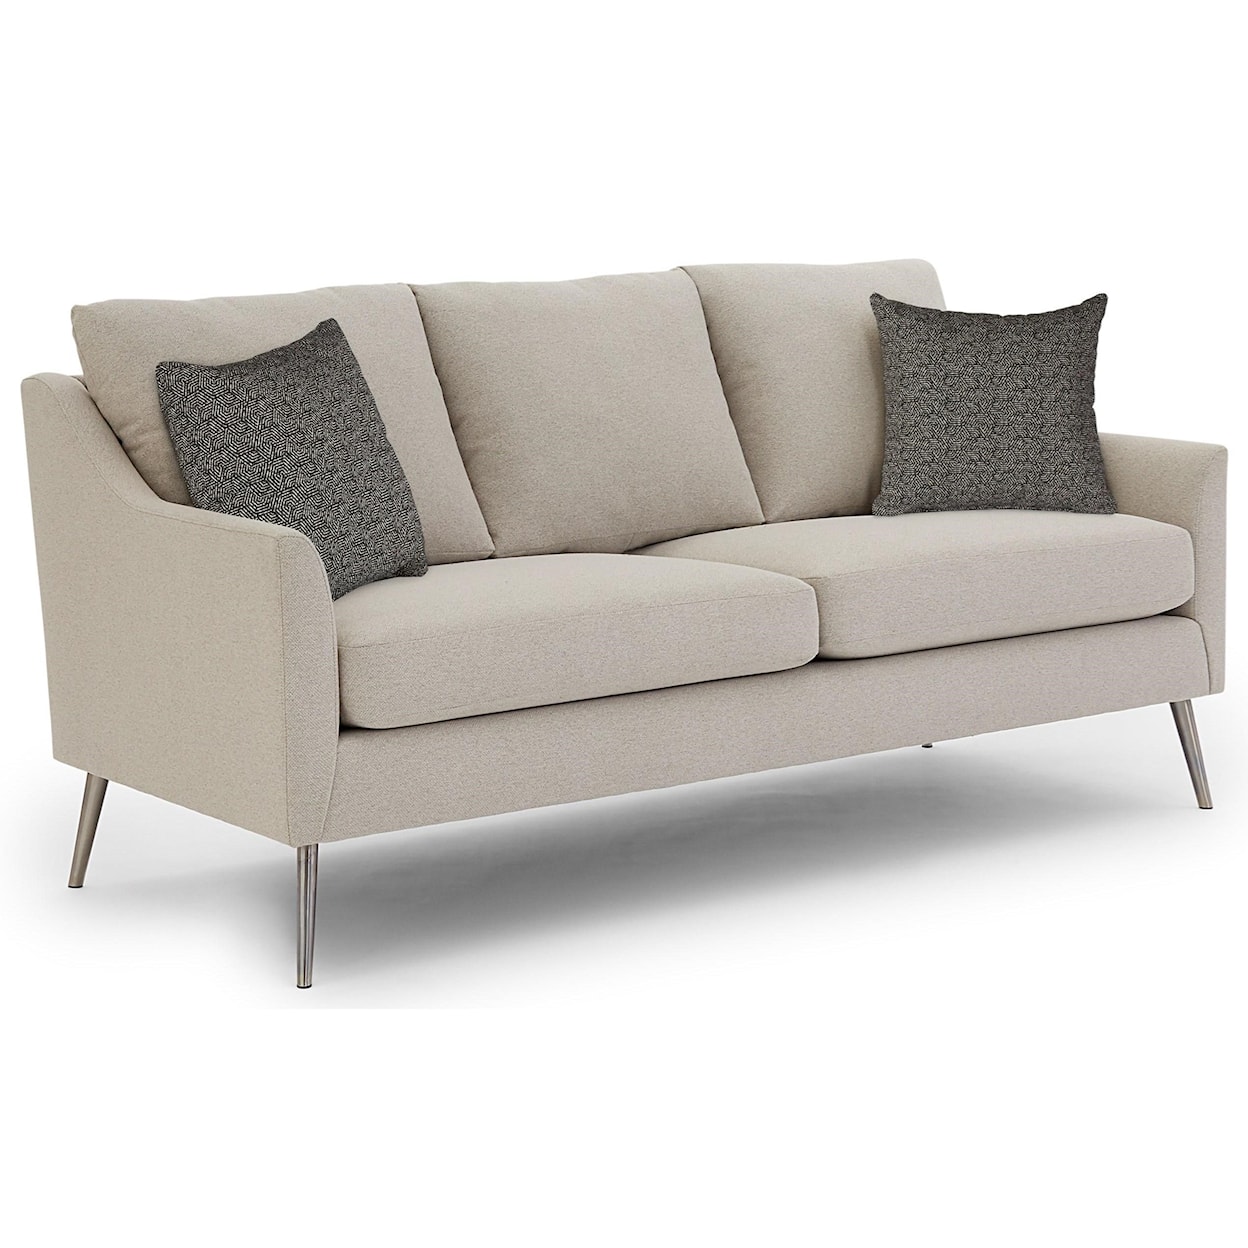 Bravo Furniture Smitten Stationary Sofa